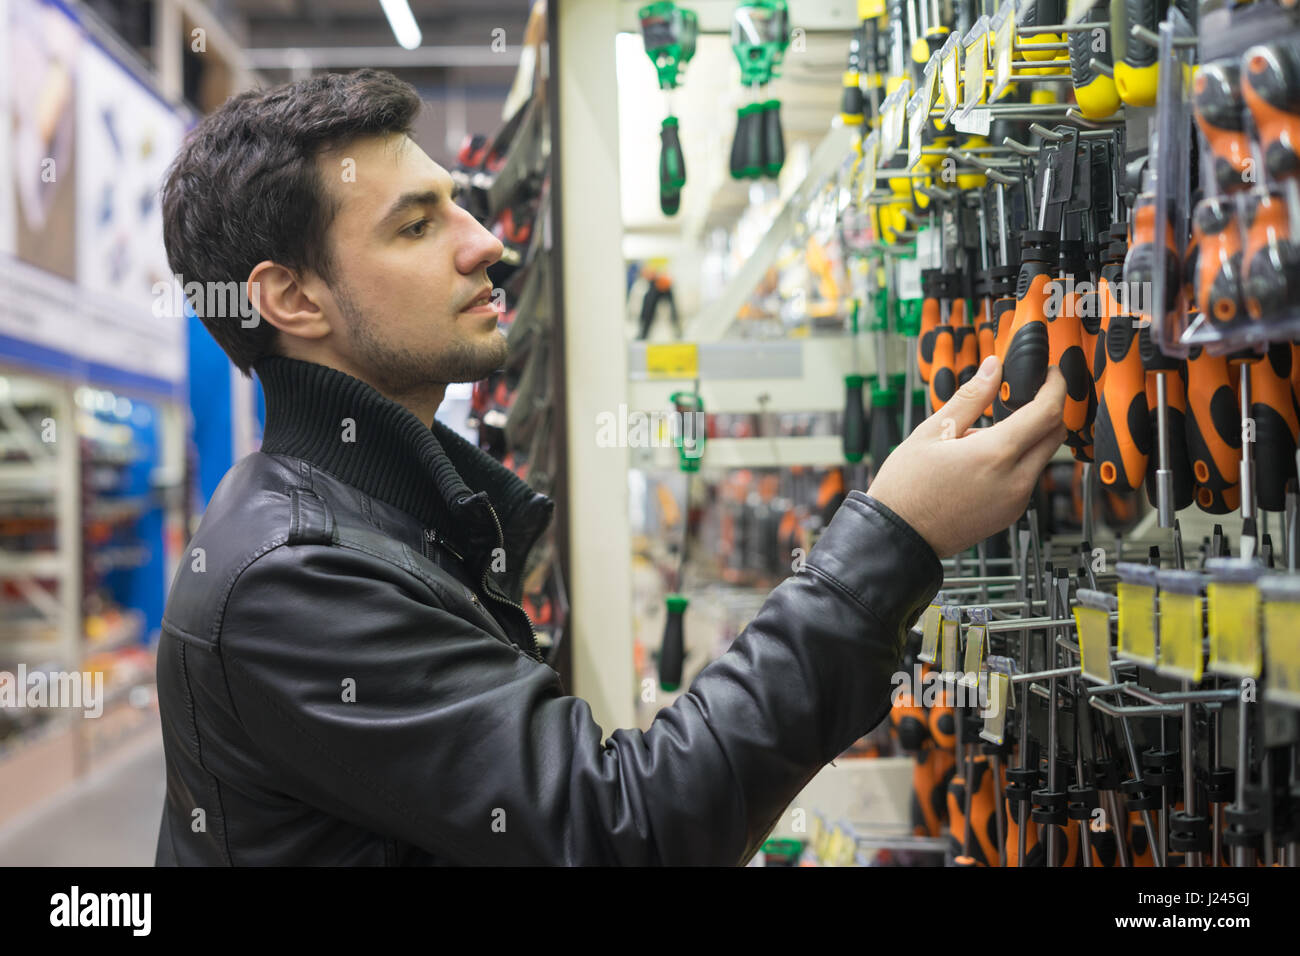 male customer choosing screwdrivers Stock Photo